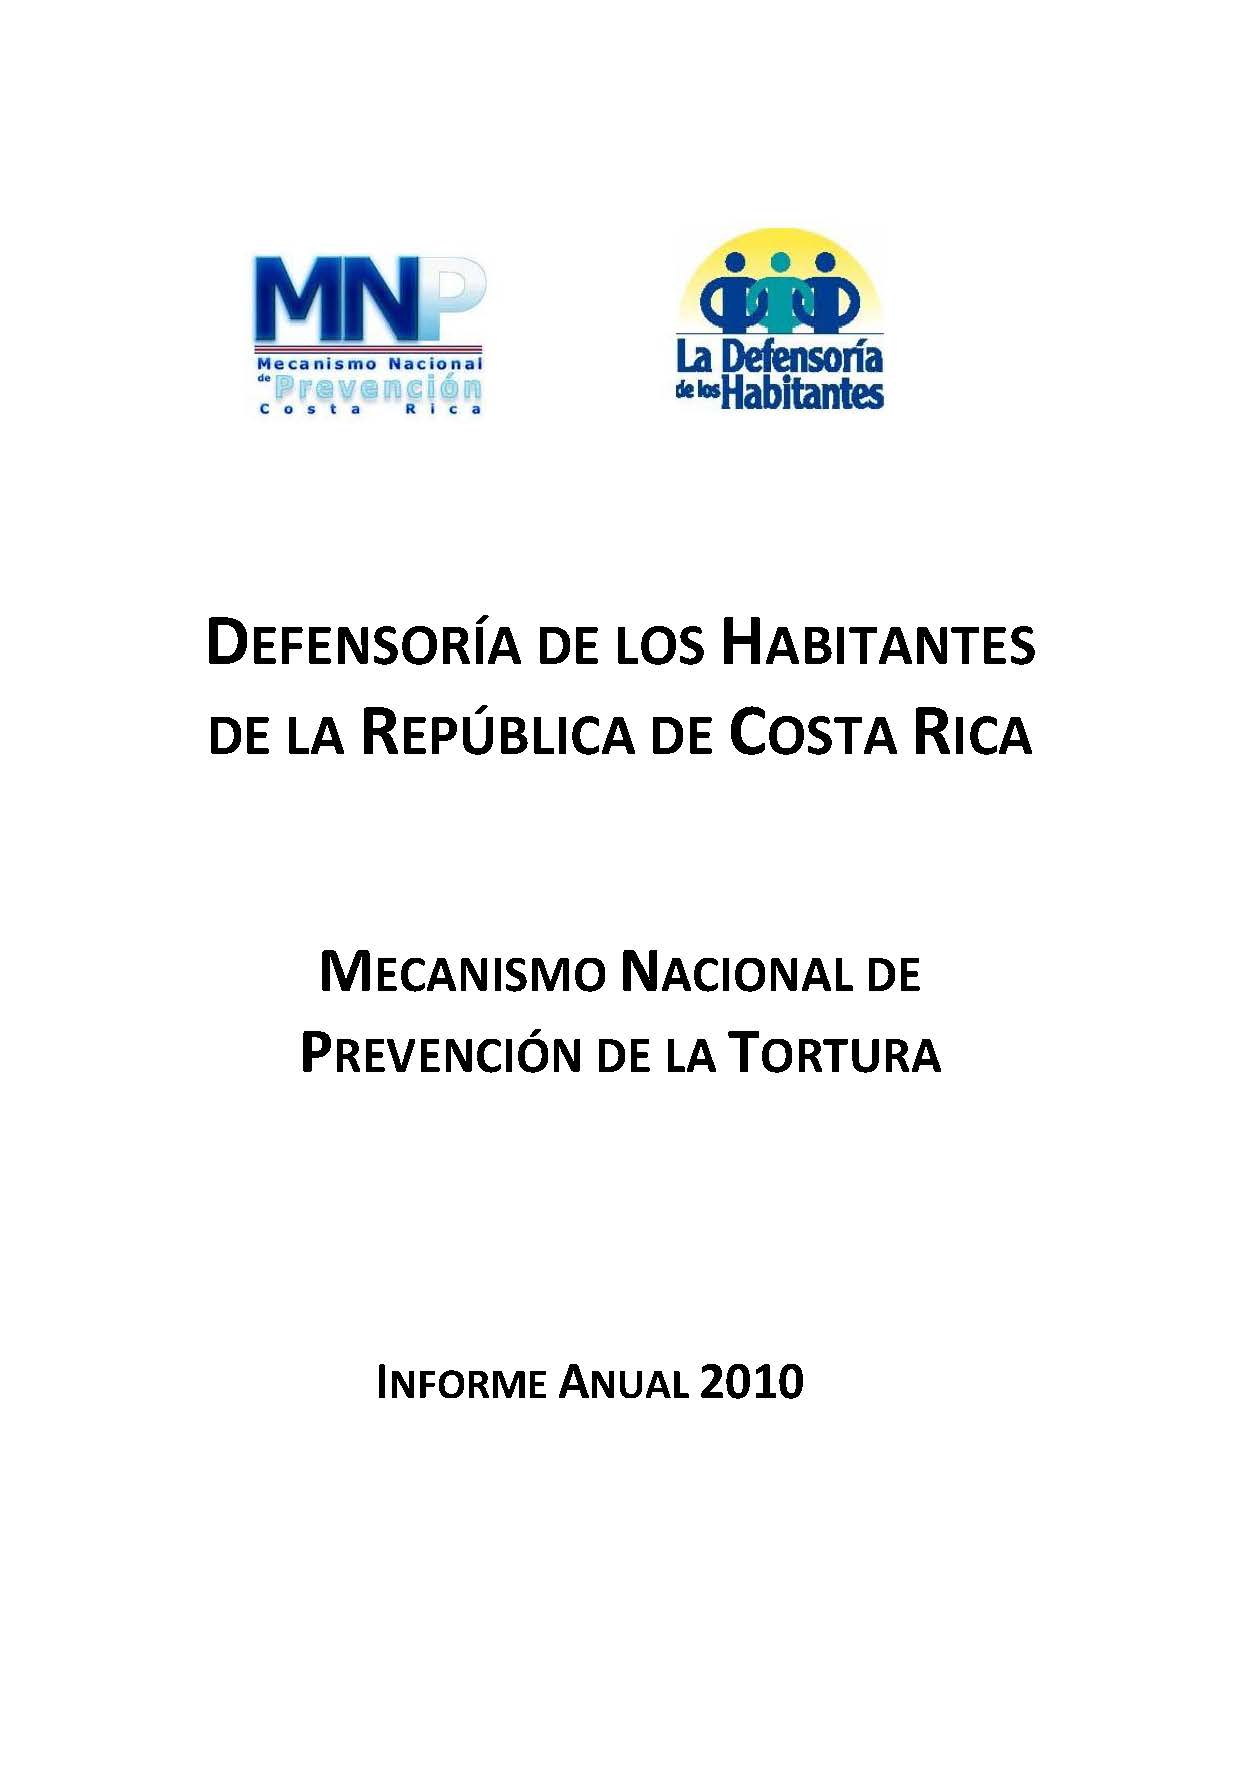 informe anual de labores 2010